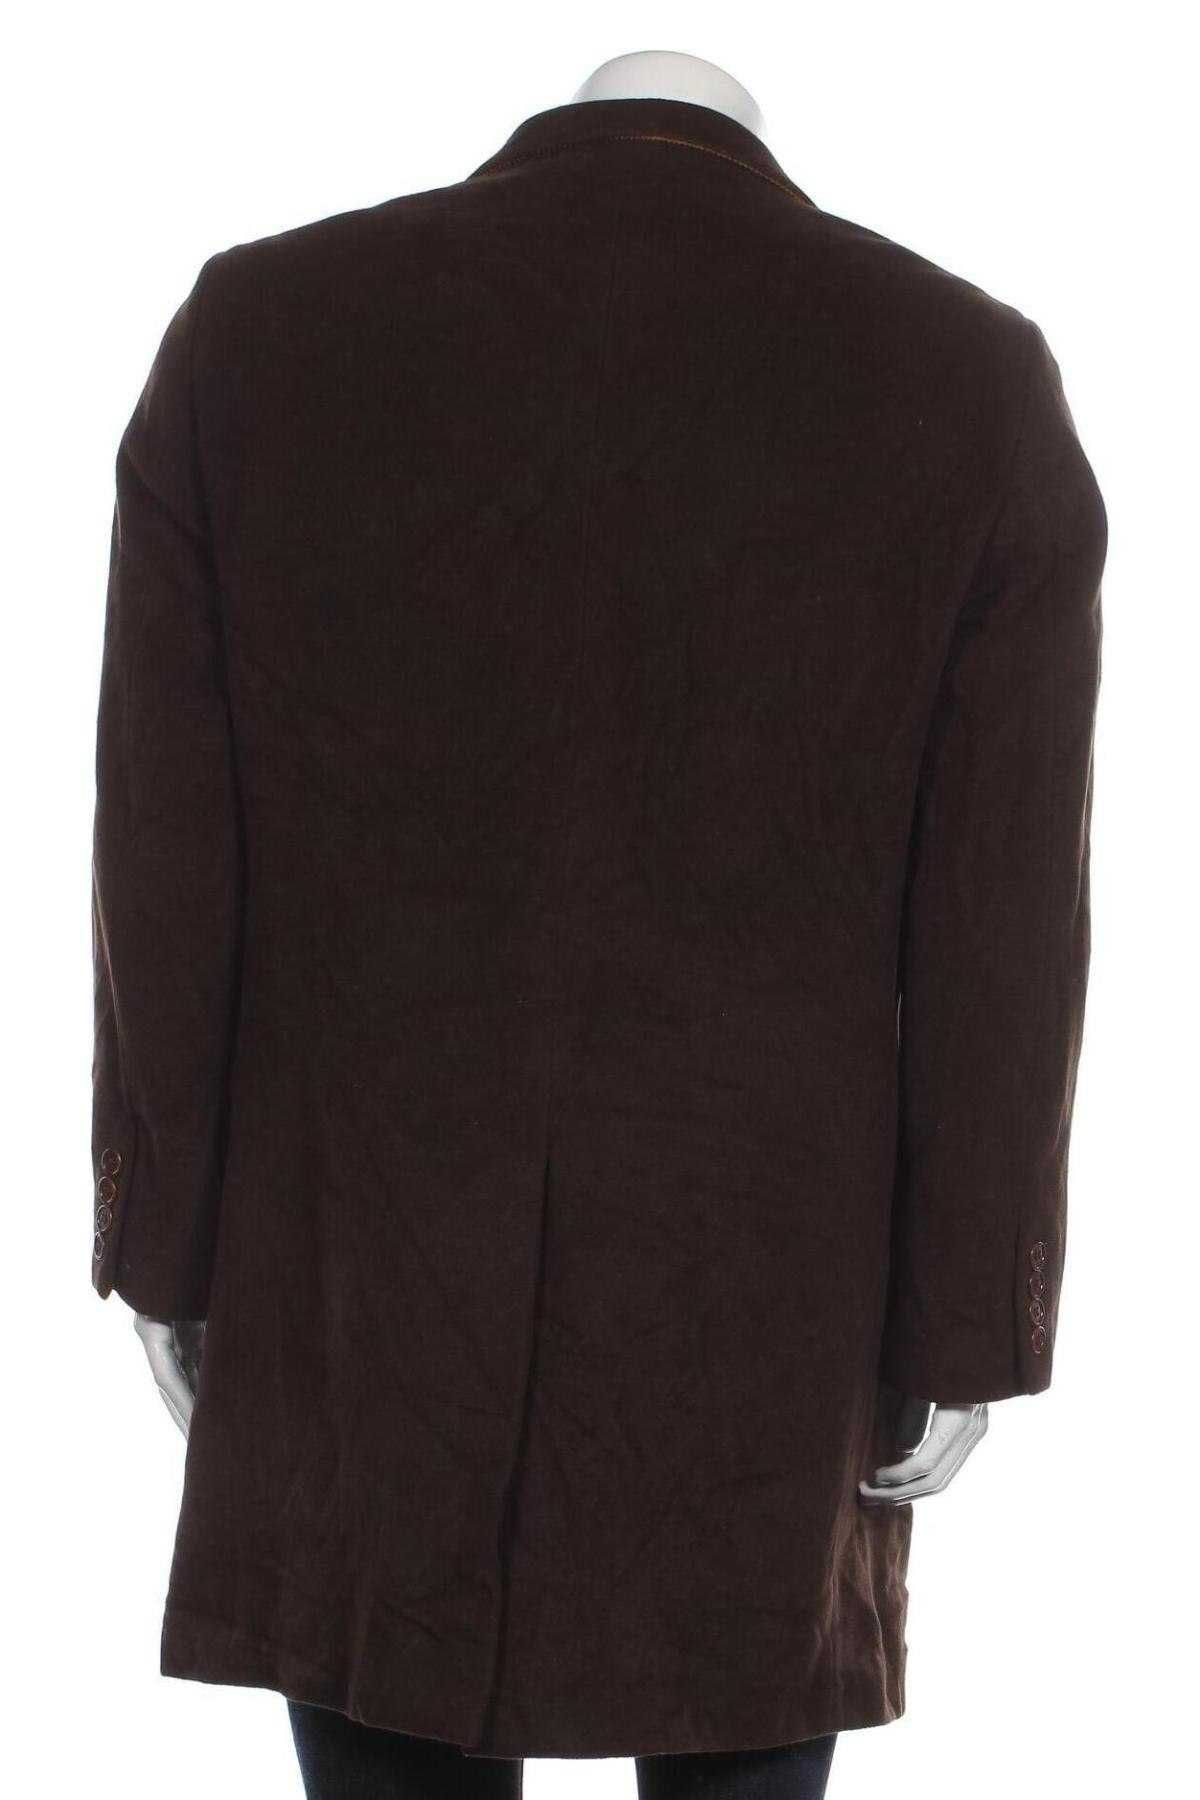 Palton regular 52 XL premium GANT lana alpaca